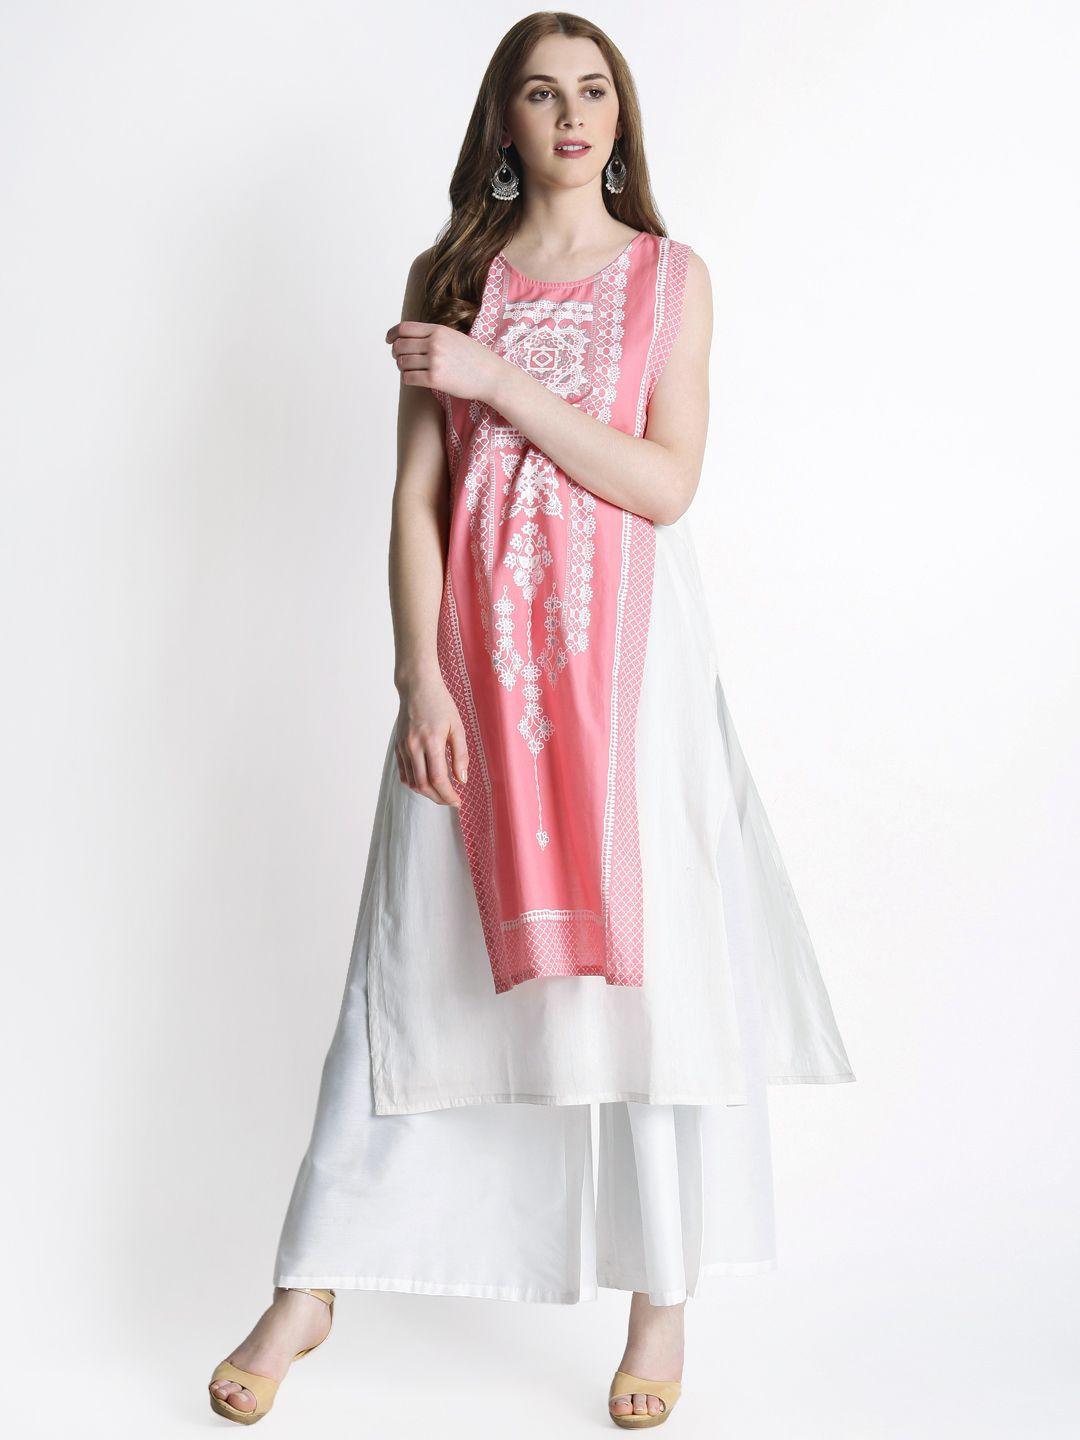 rangmanch by pantaloons women pink & white printed a-line layered kurta